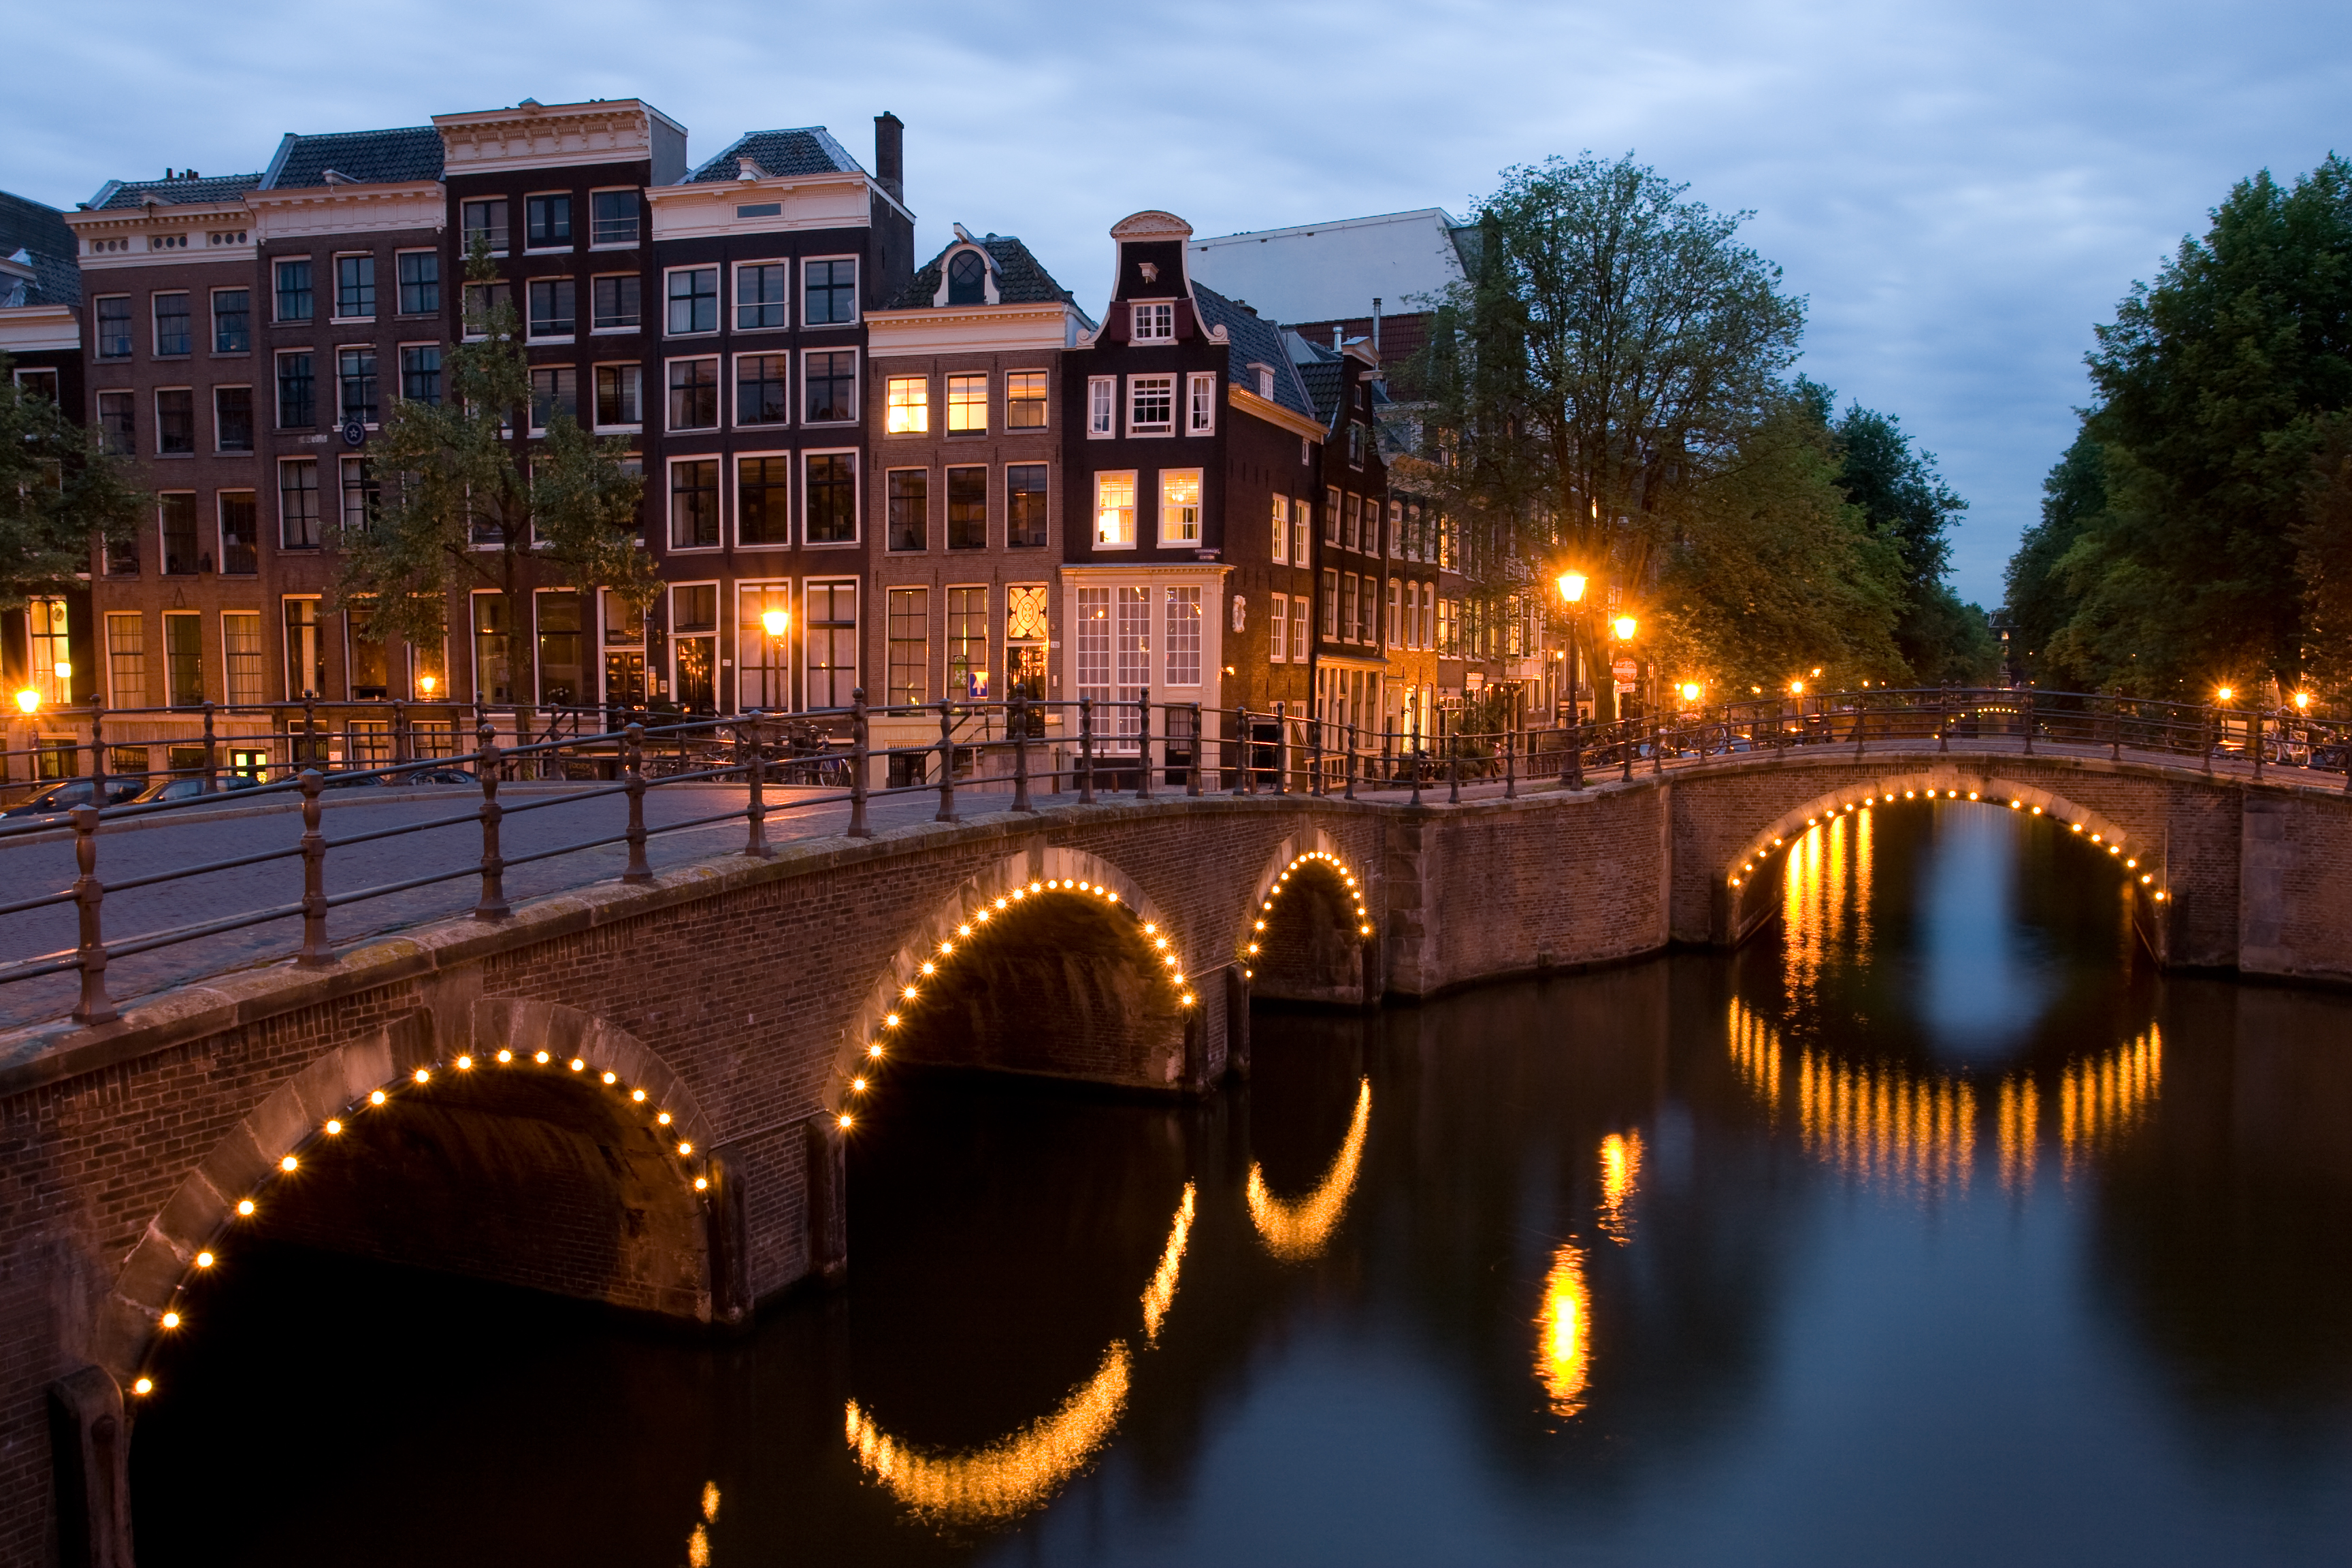 Amsterdam Background